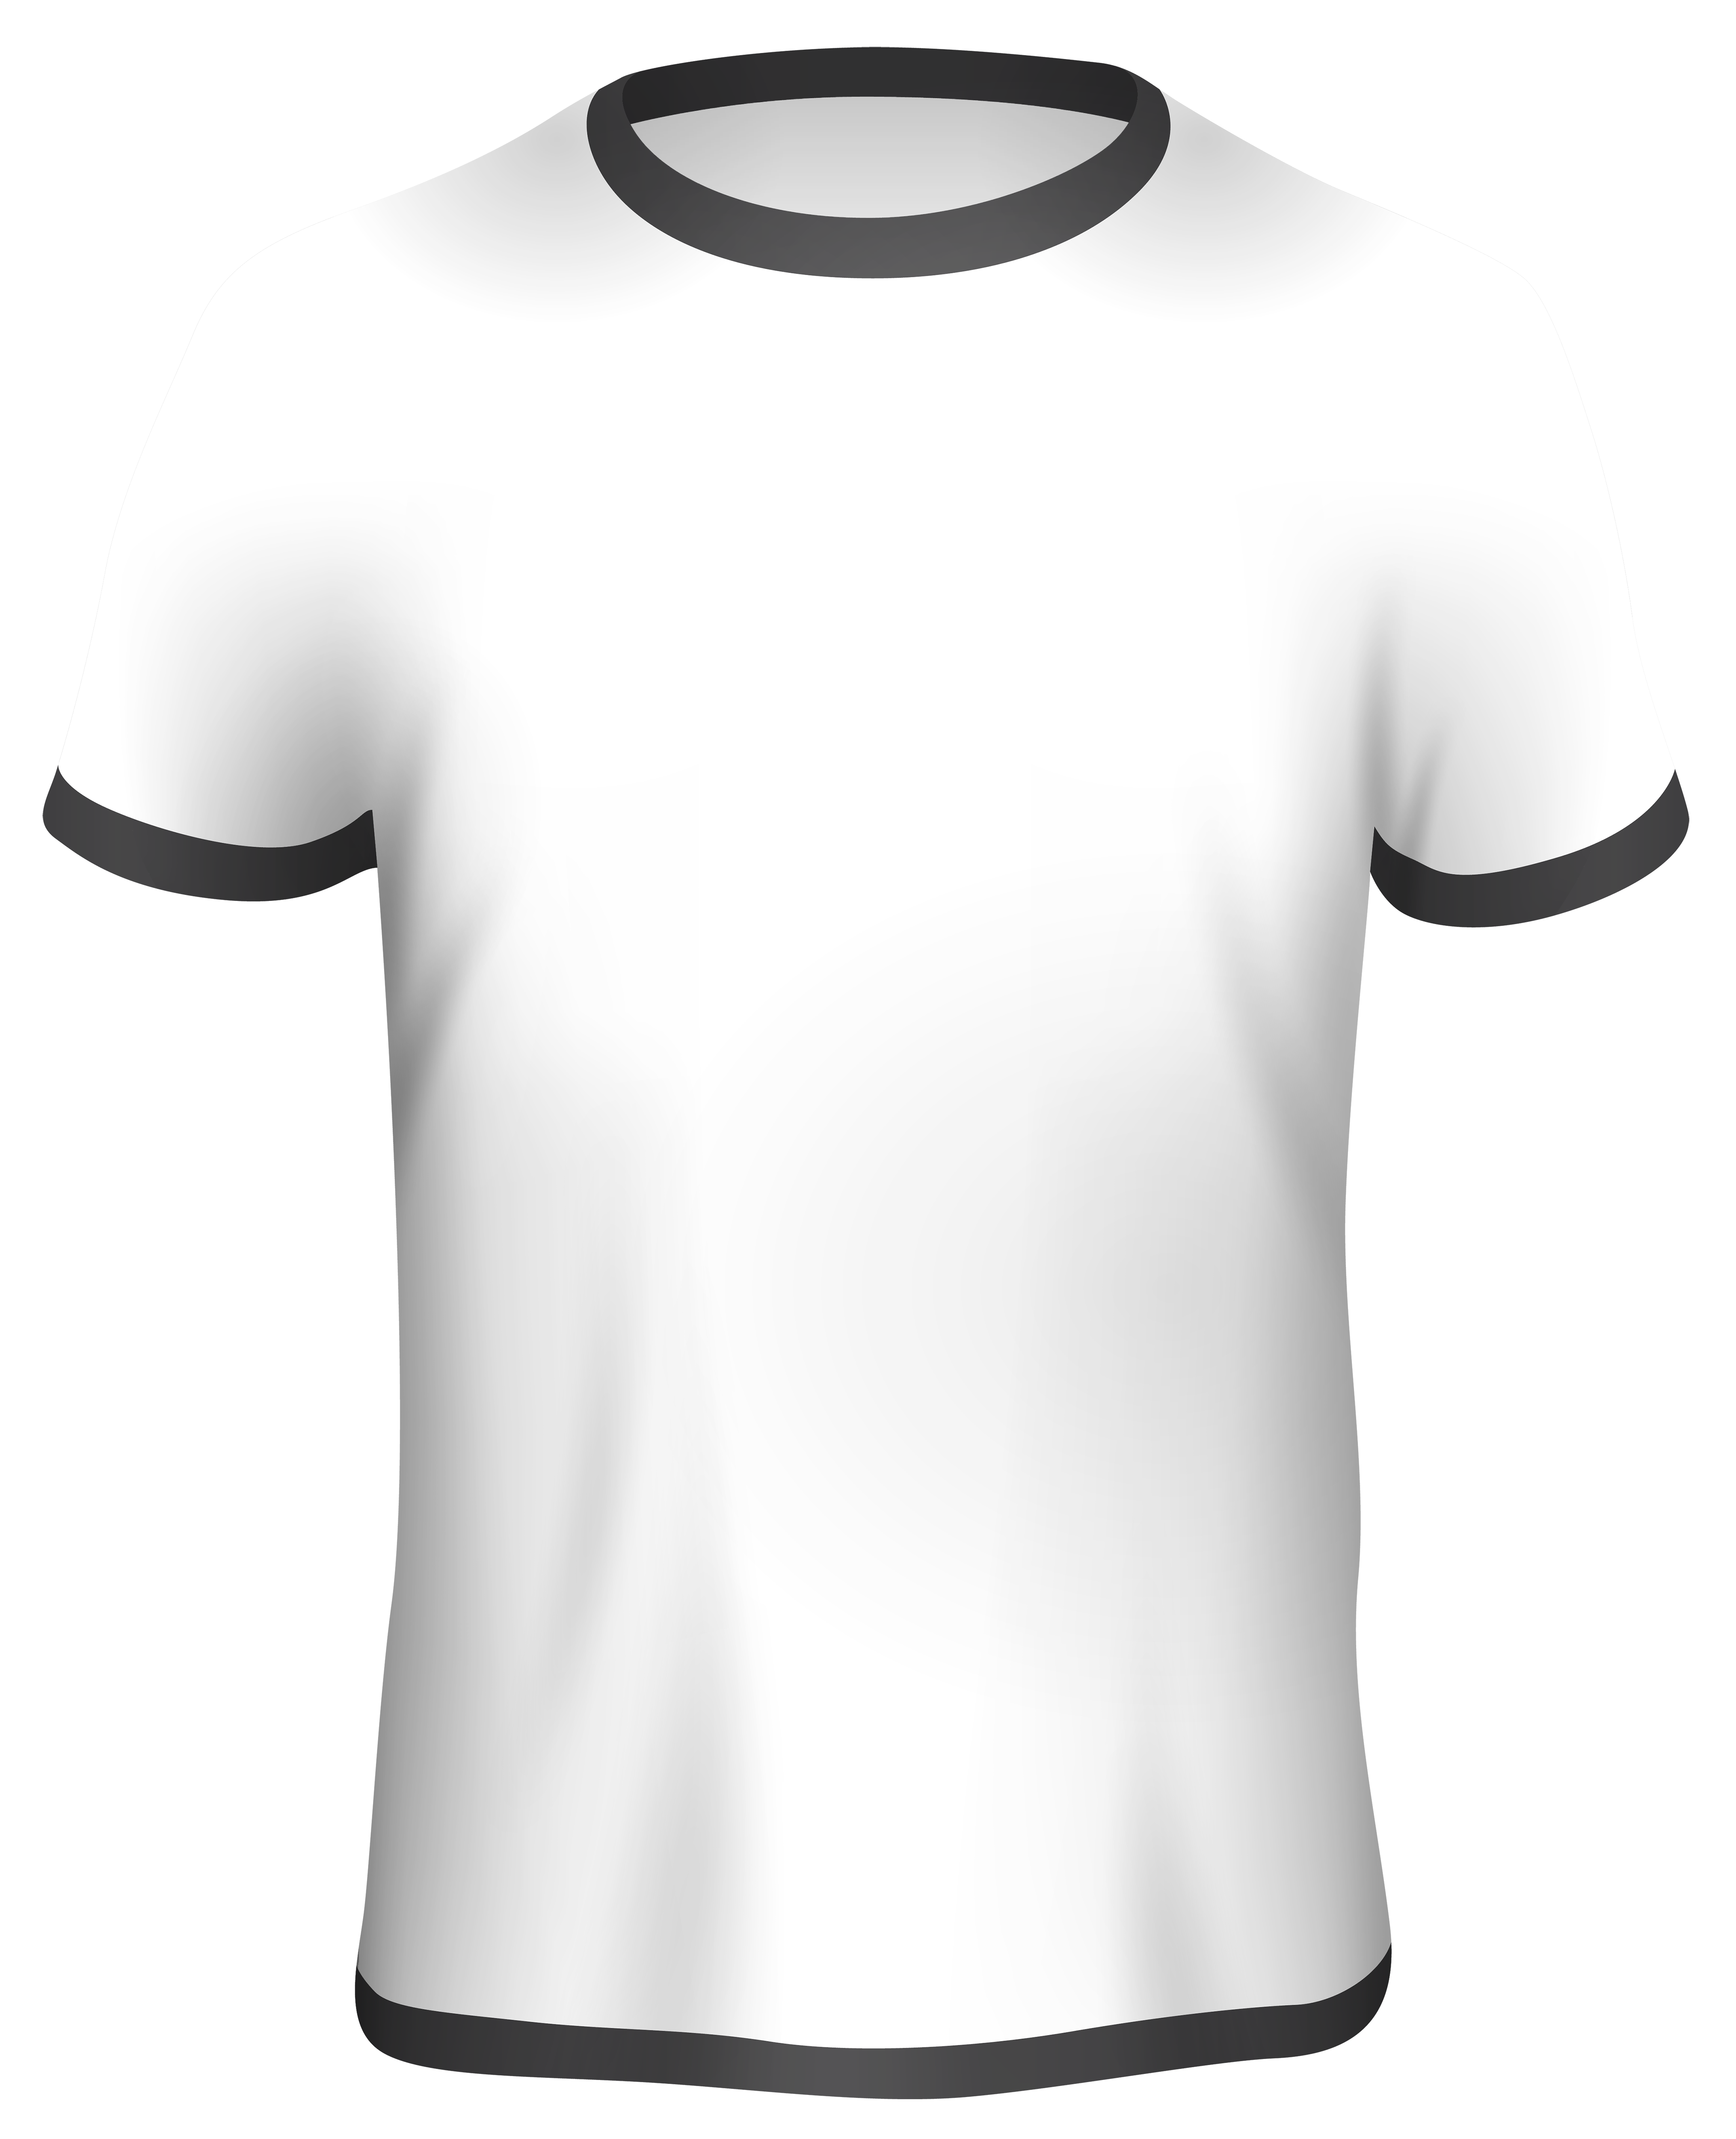 Tshirt White Back transparent PNG - StickPNG